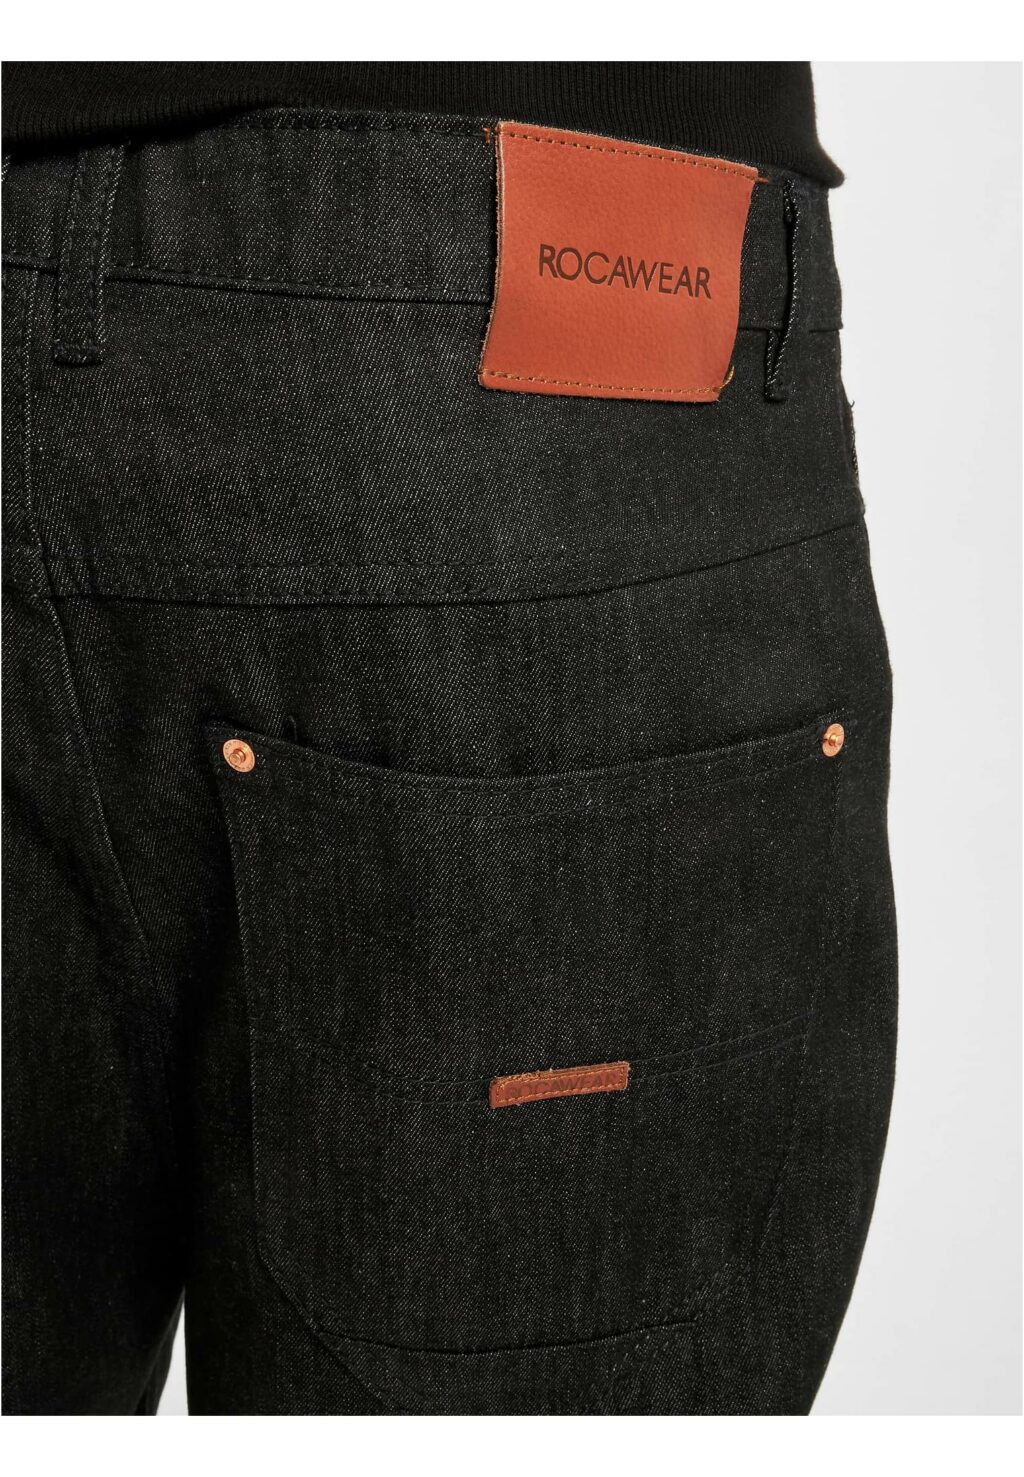 Rocawear Hammer Fit Jeans raw black RWJS021